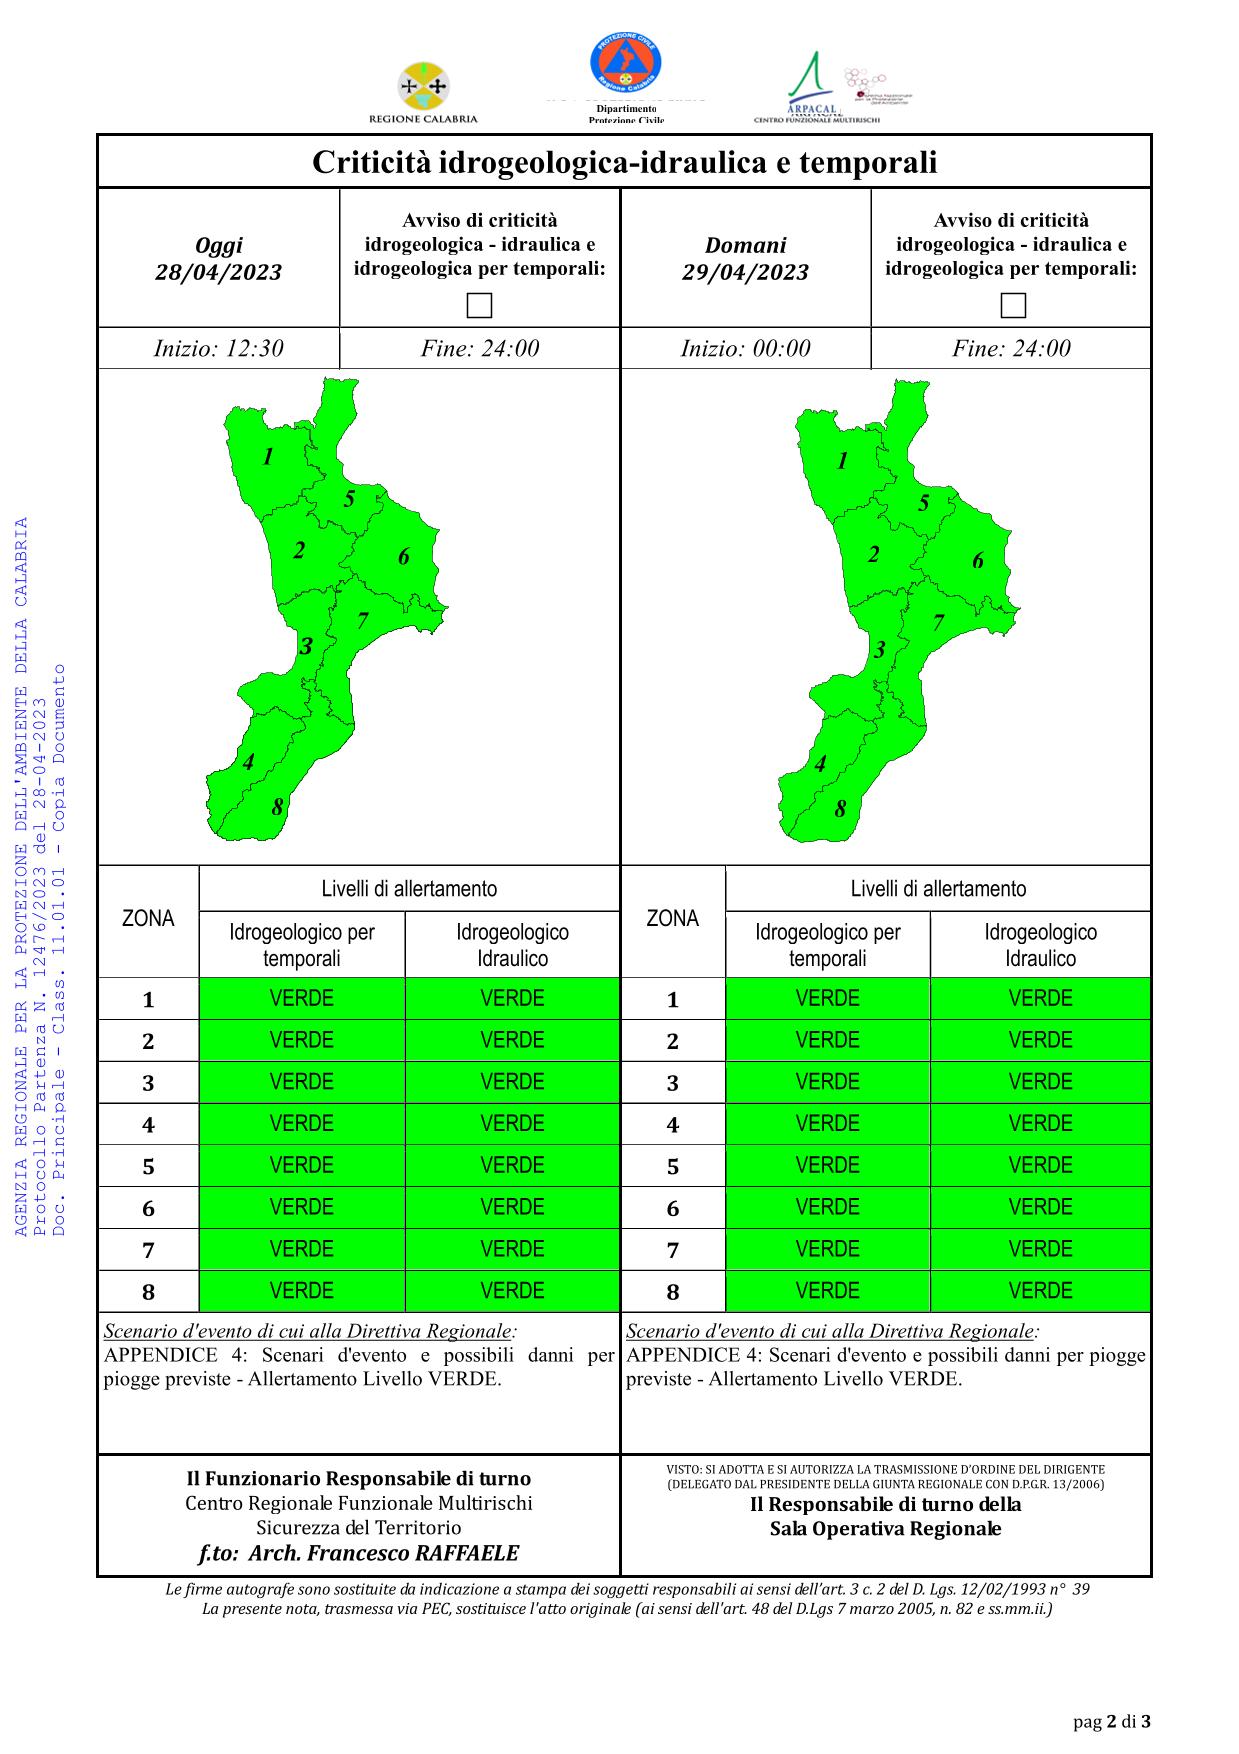 Criticità idrogeologica-idraulica e temporali in Calabria 28-04-2023